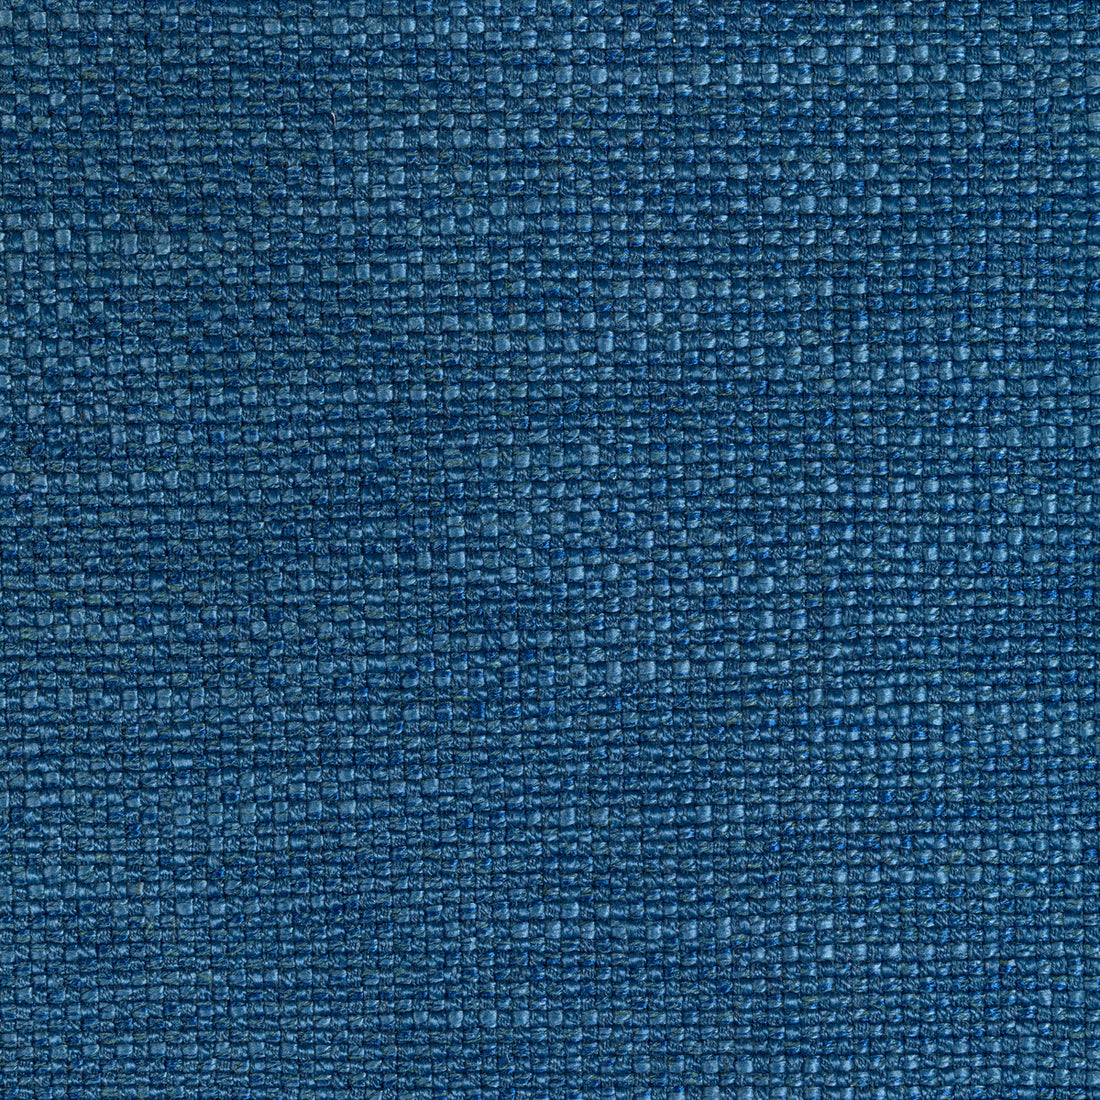 Kravet Design fabric in 36594-550 color - pattern 36594.550.0 - by Kravet Design in the Performance Kravetarmor collection